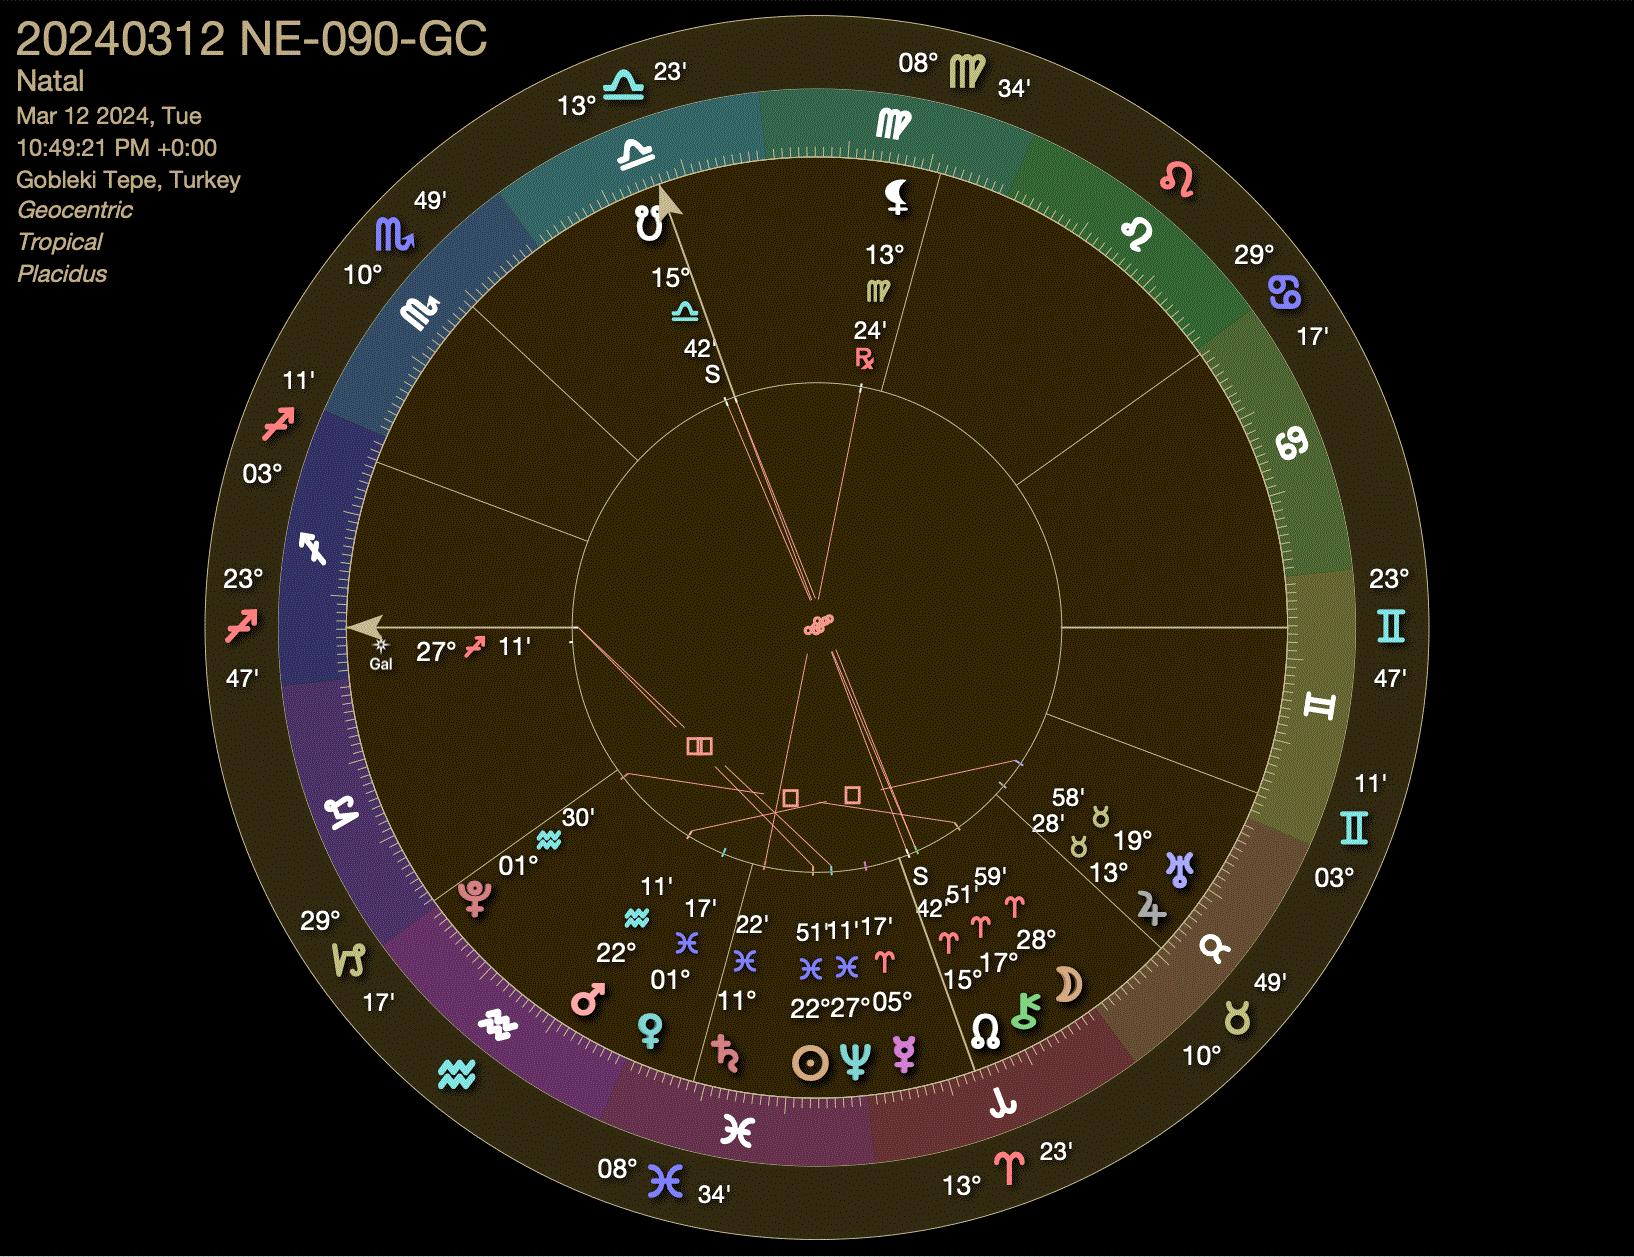 MAR 12, 2024 Neptune-'
GC Waxing Square